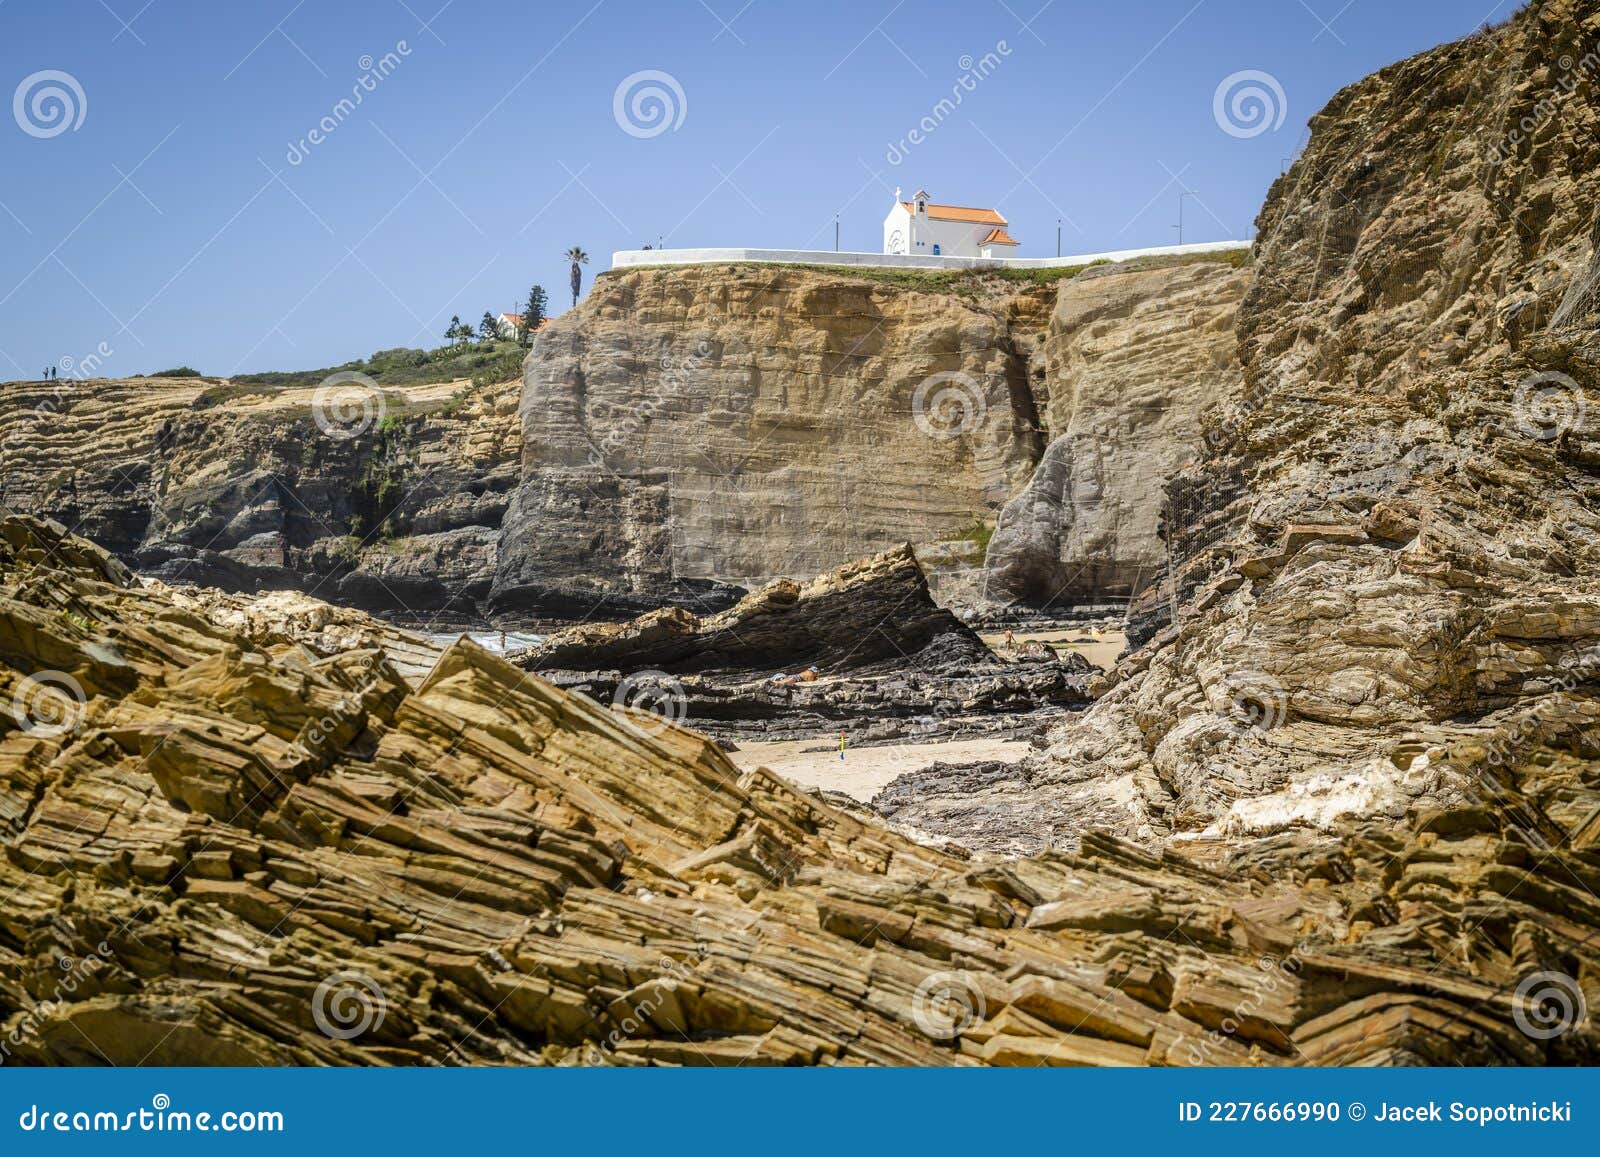 cliffy beach in zambujeira do mar, vincentina coast natural park, alentejo, portugal